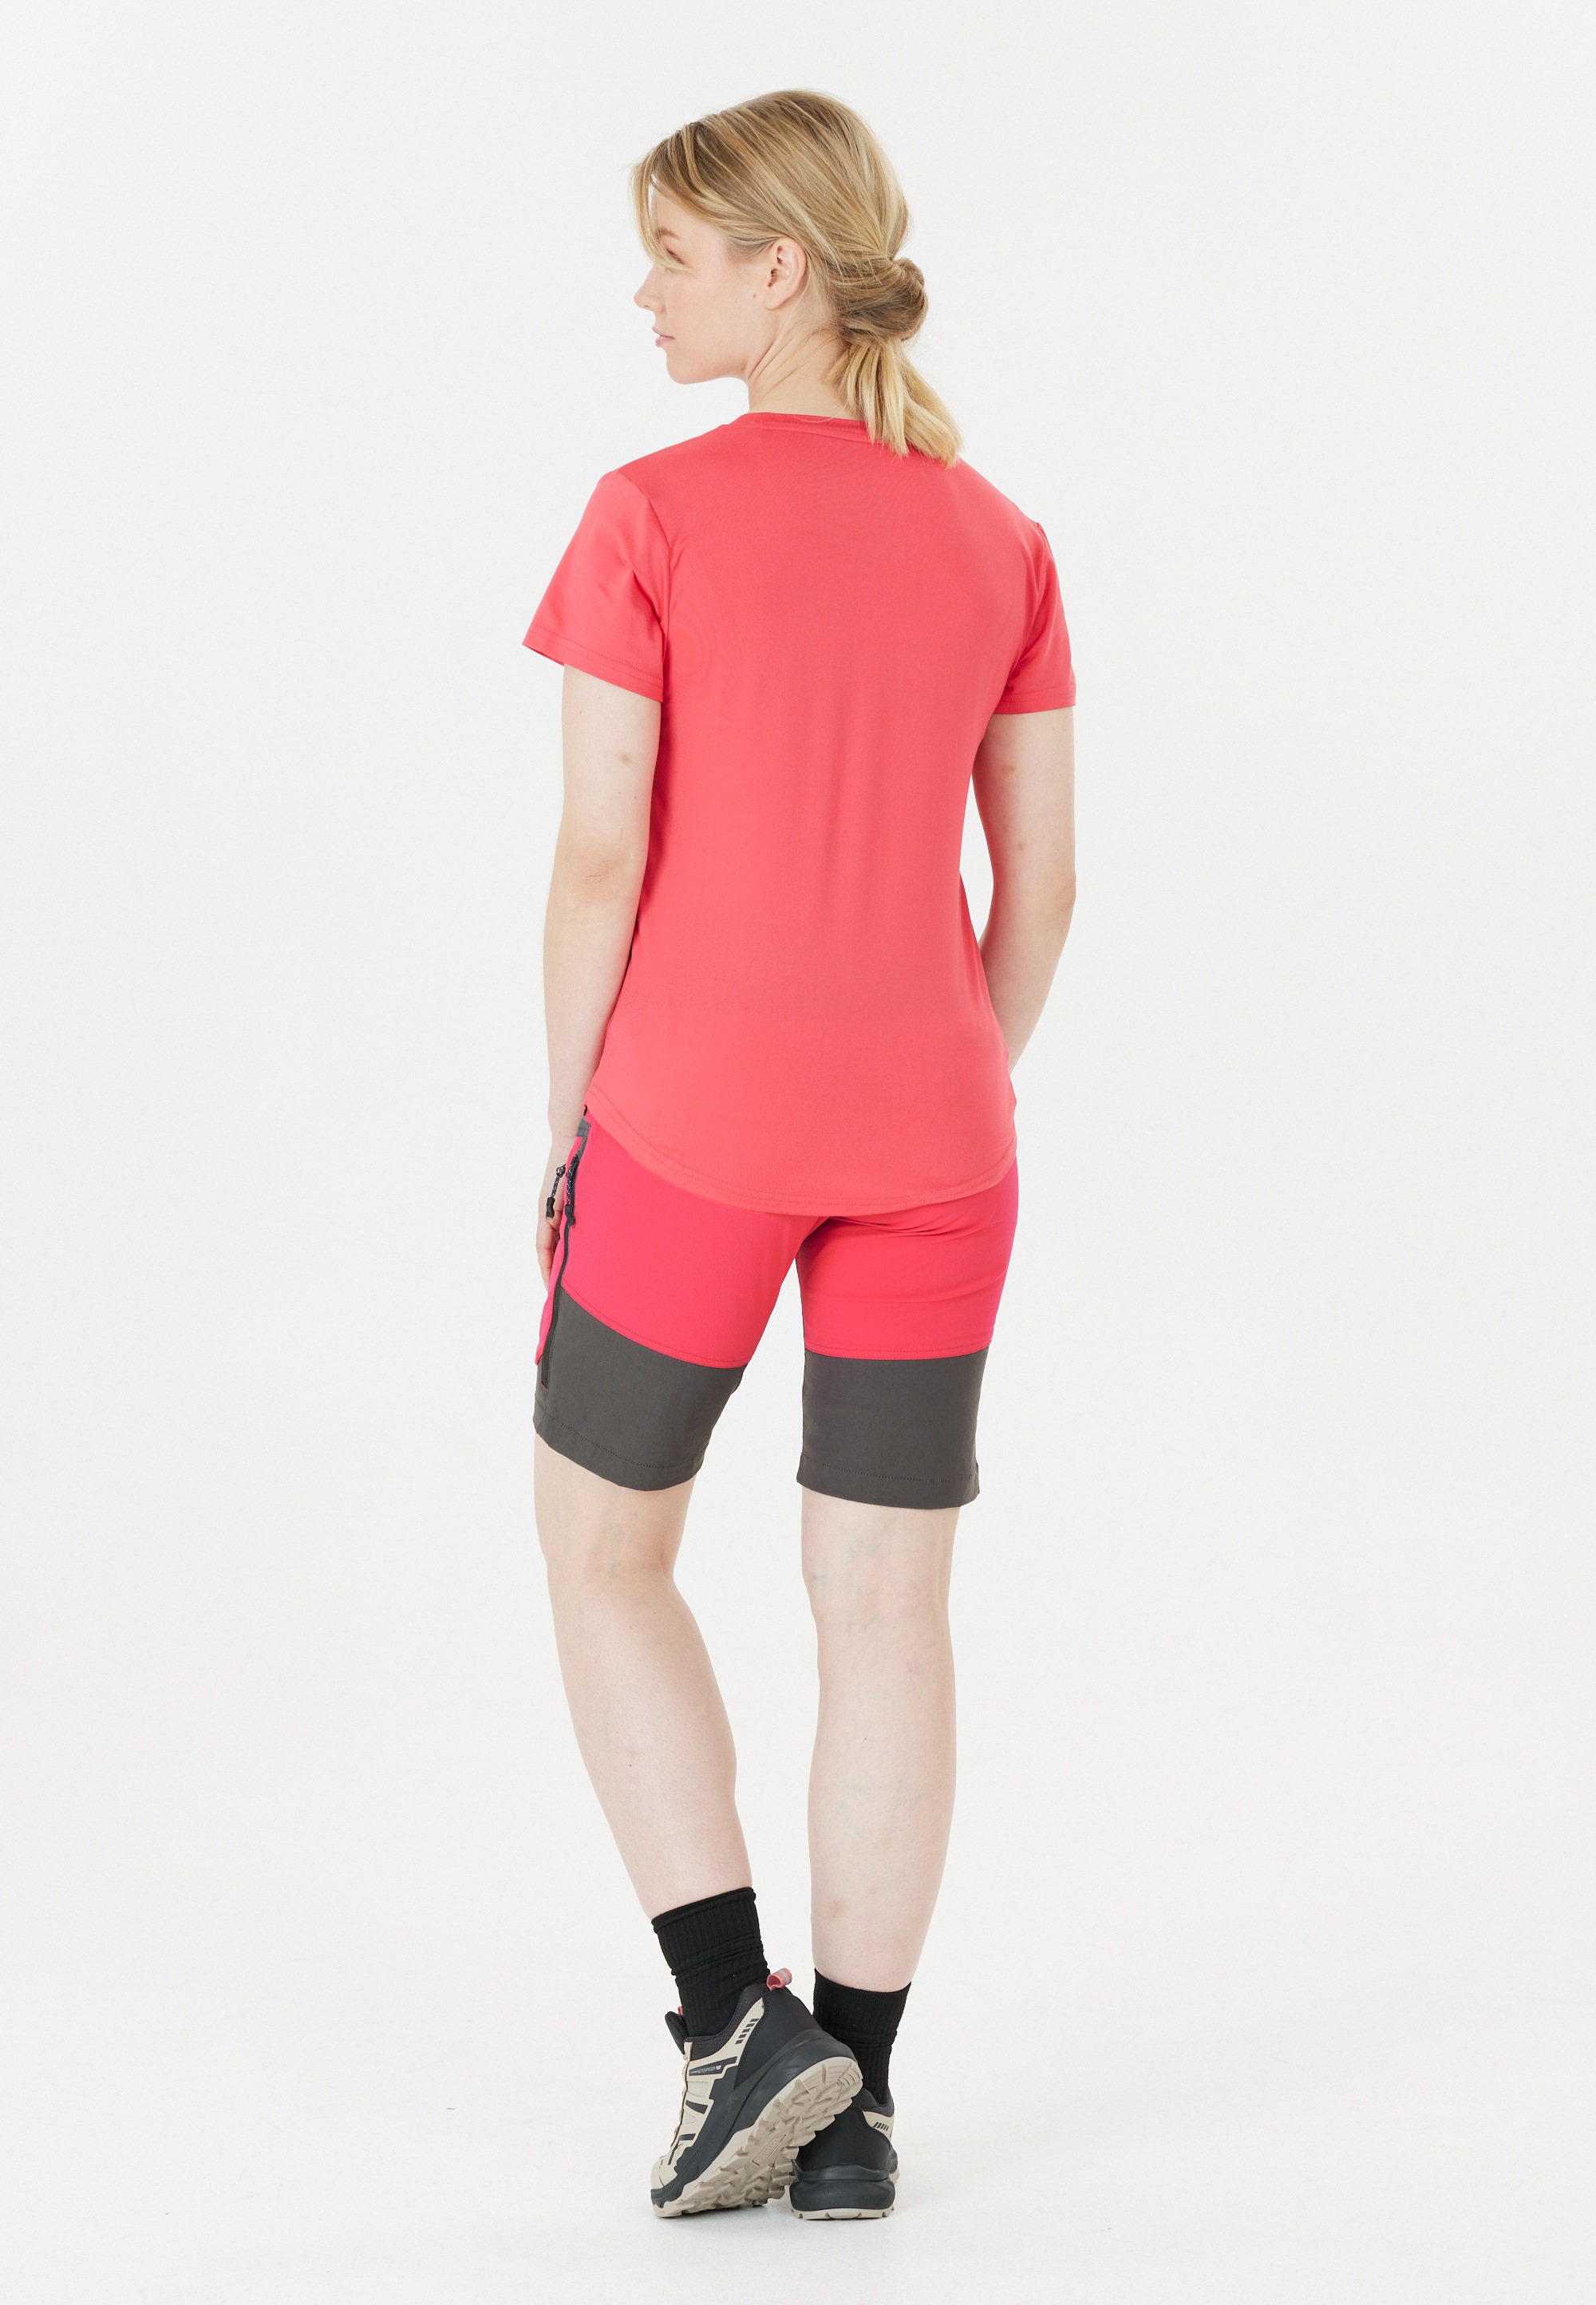 WHISTLER Shorts »Kodiak«, mit 4-Wege-Stretch-Material